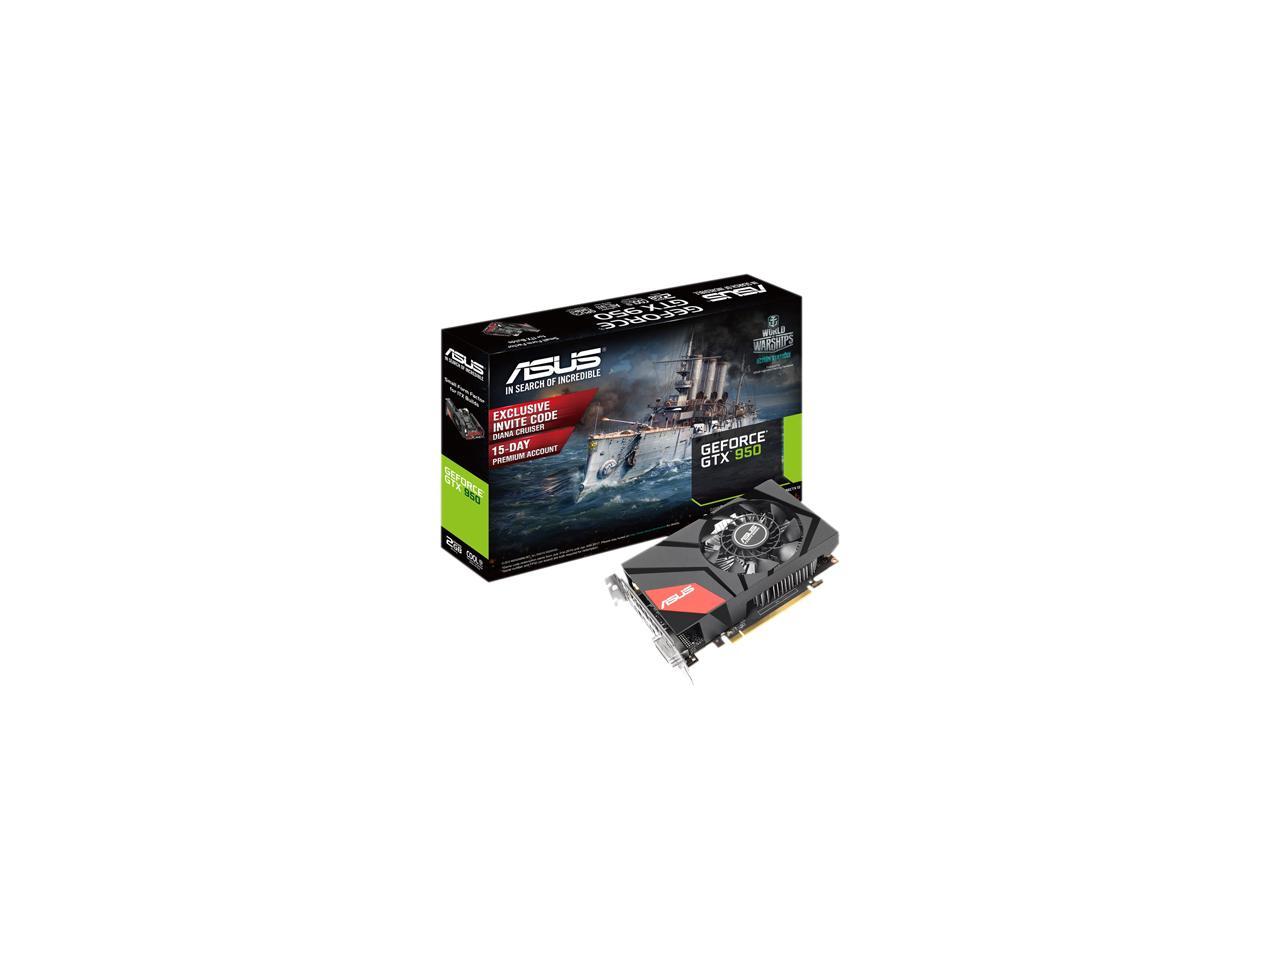 ASUS GeForce GTX 950 MINI-GTX950-2G 2GB 128-Bit GDDR5 PCI Express 3.0 HDCP Ready Video Cards